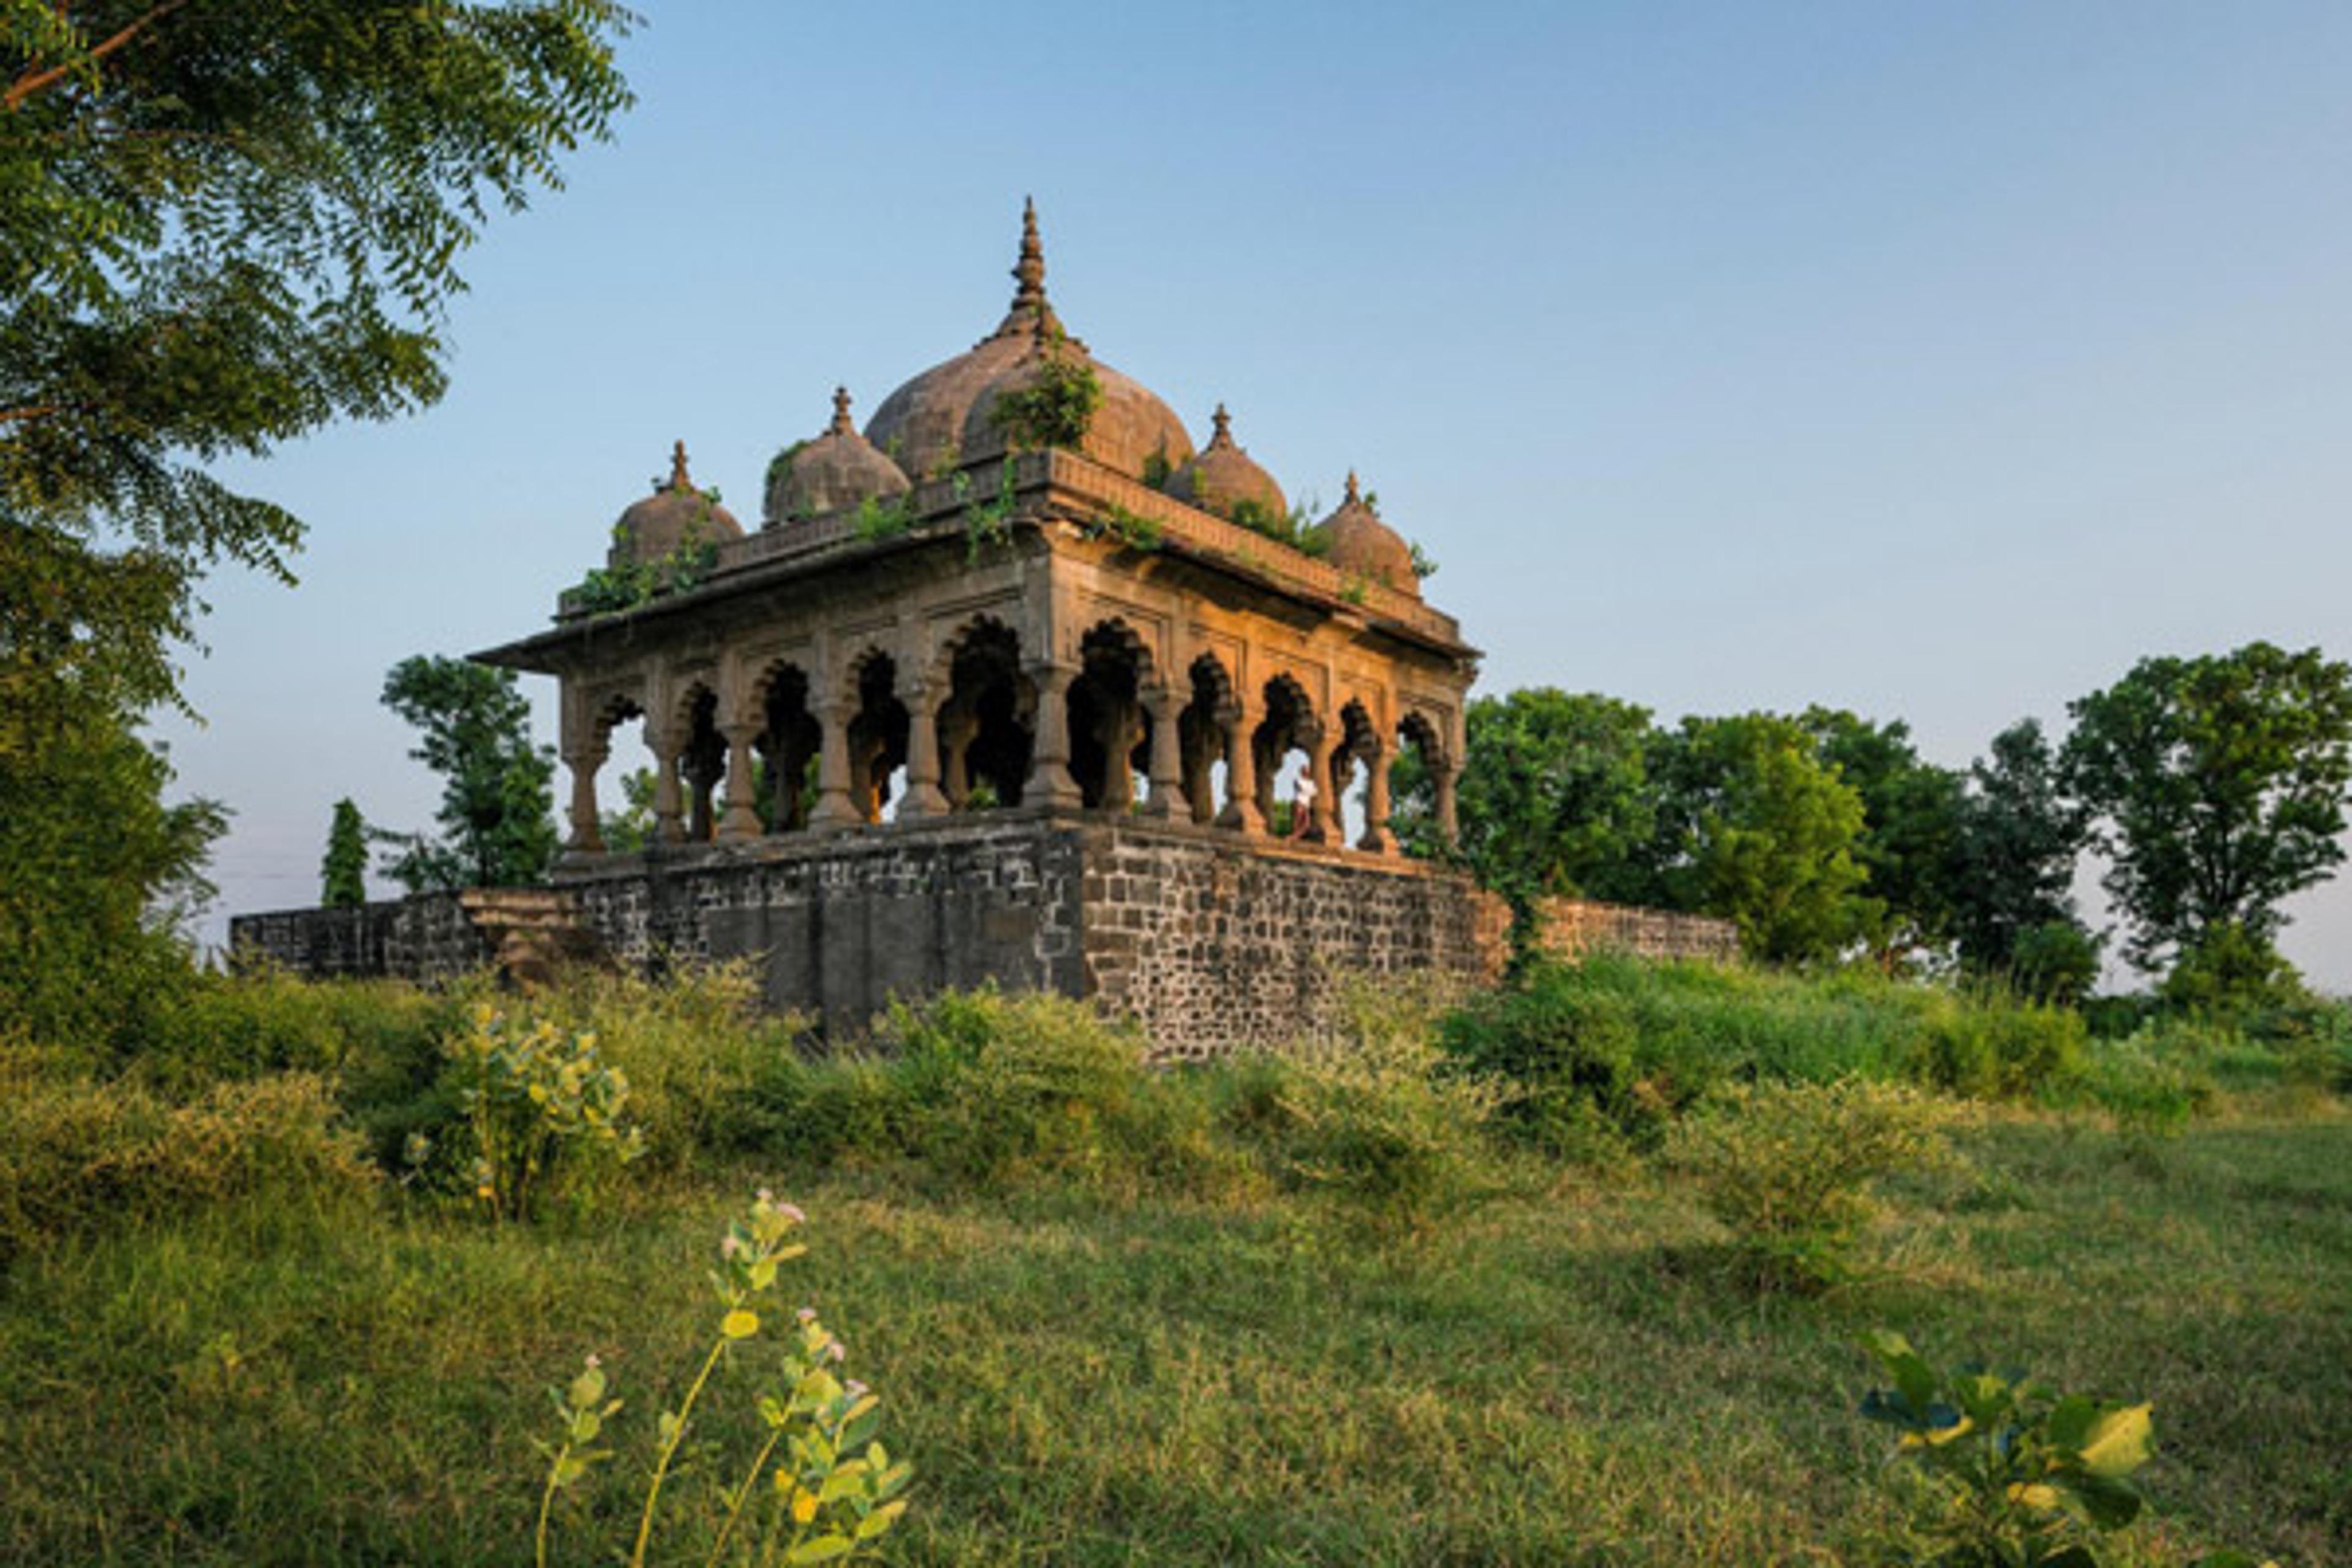 Raja ki Chhatri (King's Memorial), Tomb of Mirza Raja Jai Singh I, Burhanpur, 1667. Photography © Antonio Martinelli